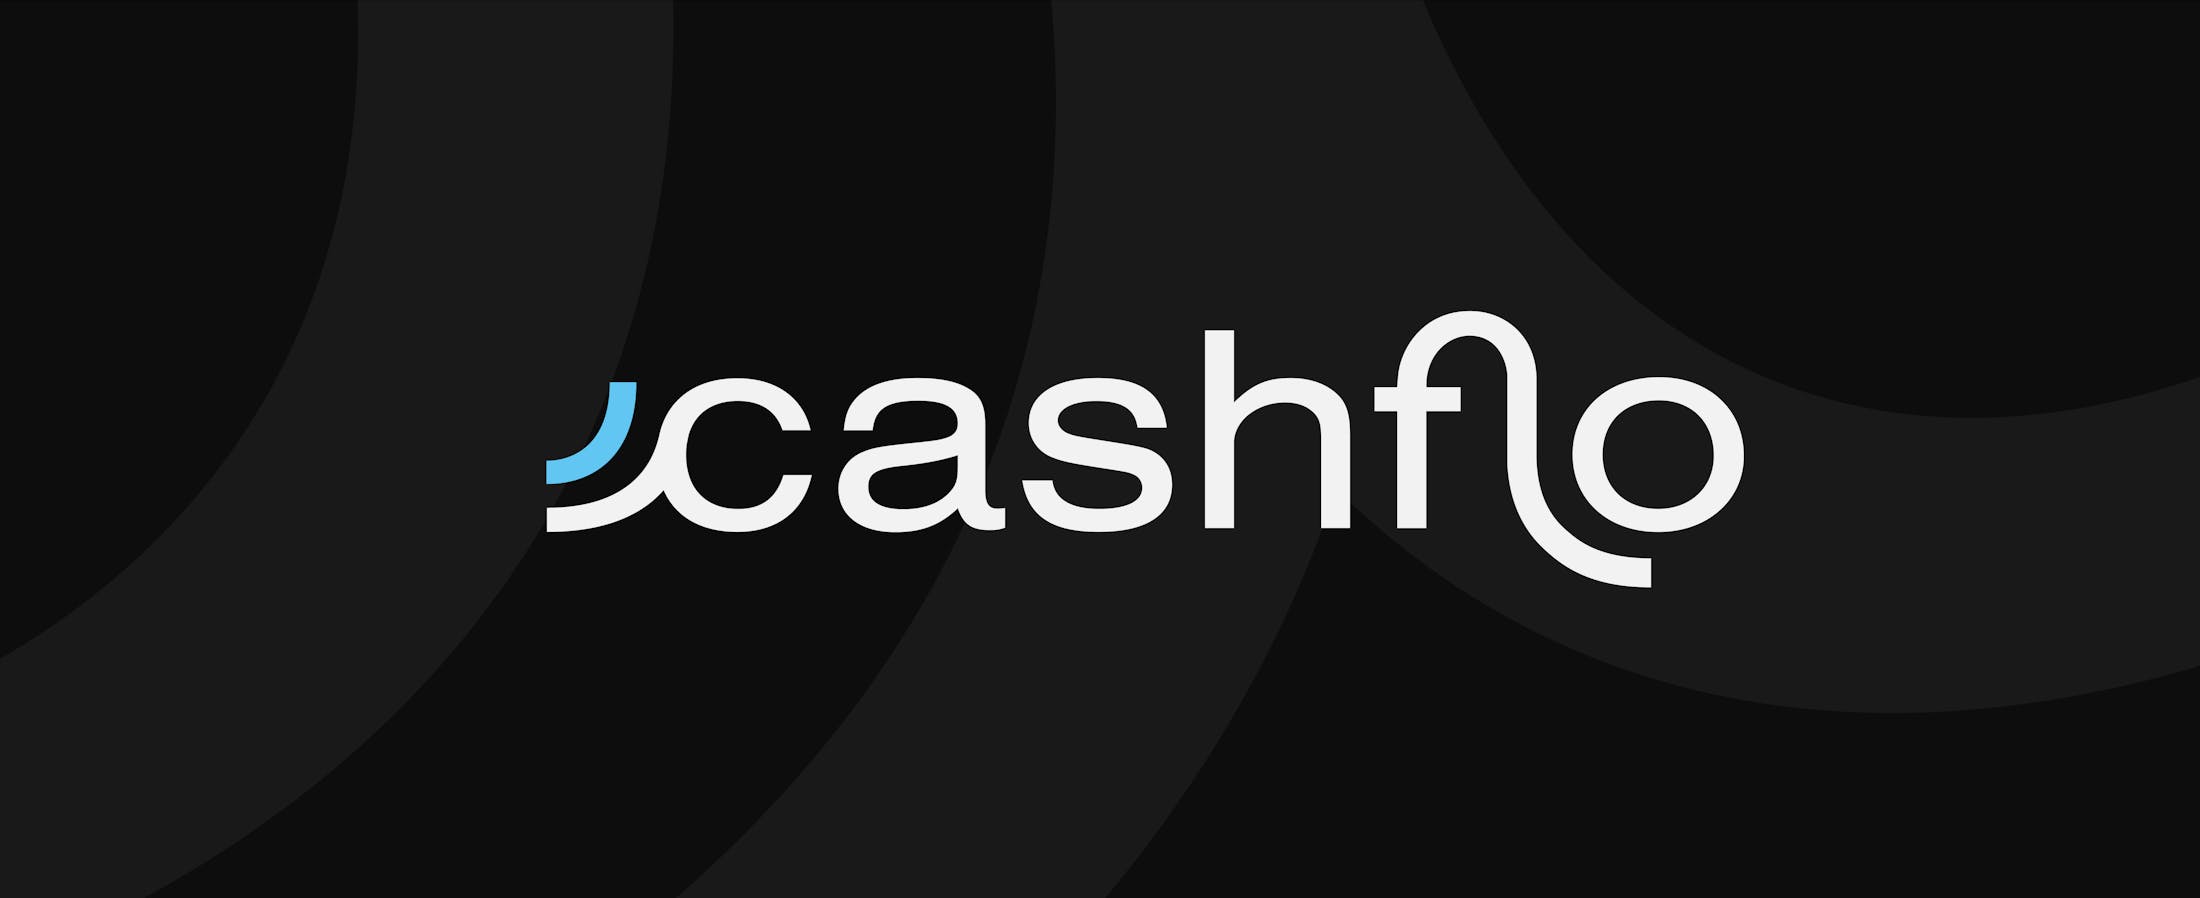 Cashflo logo on black textured background.